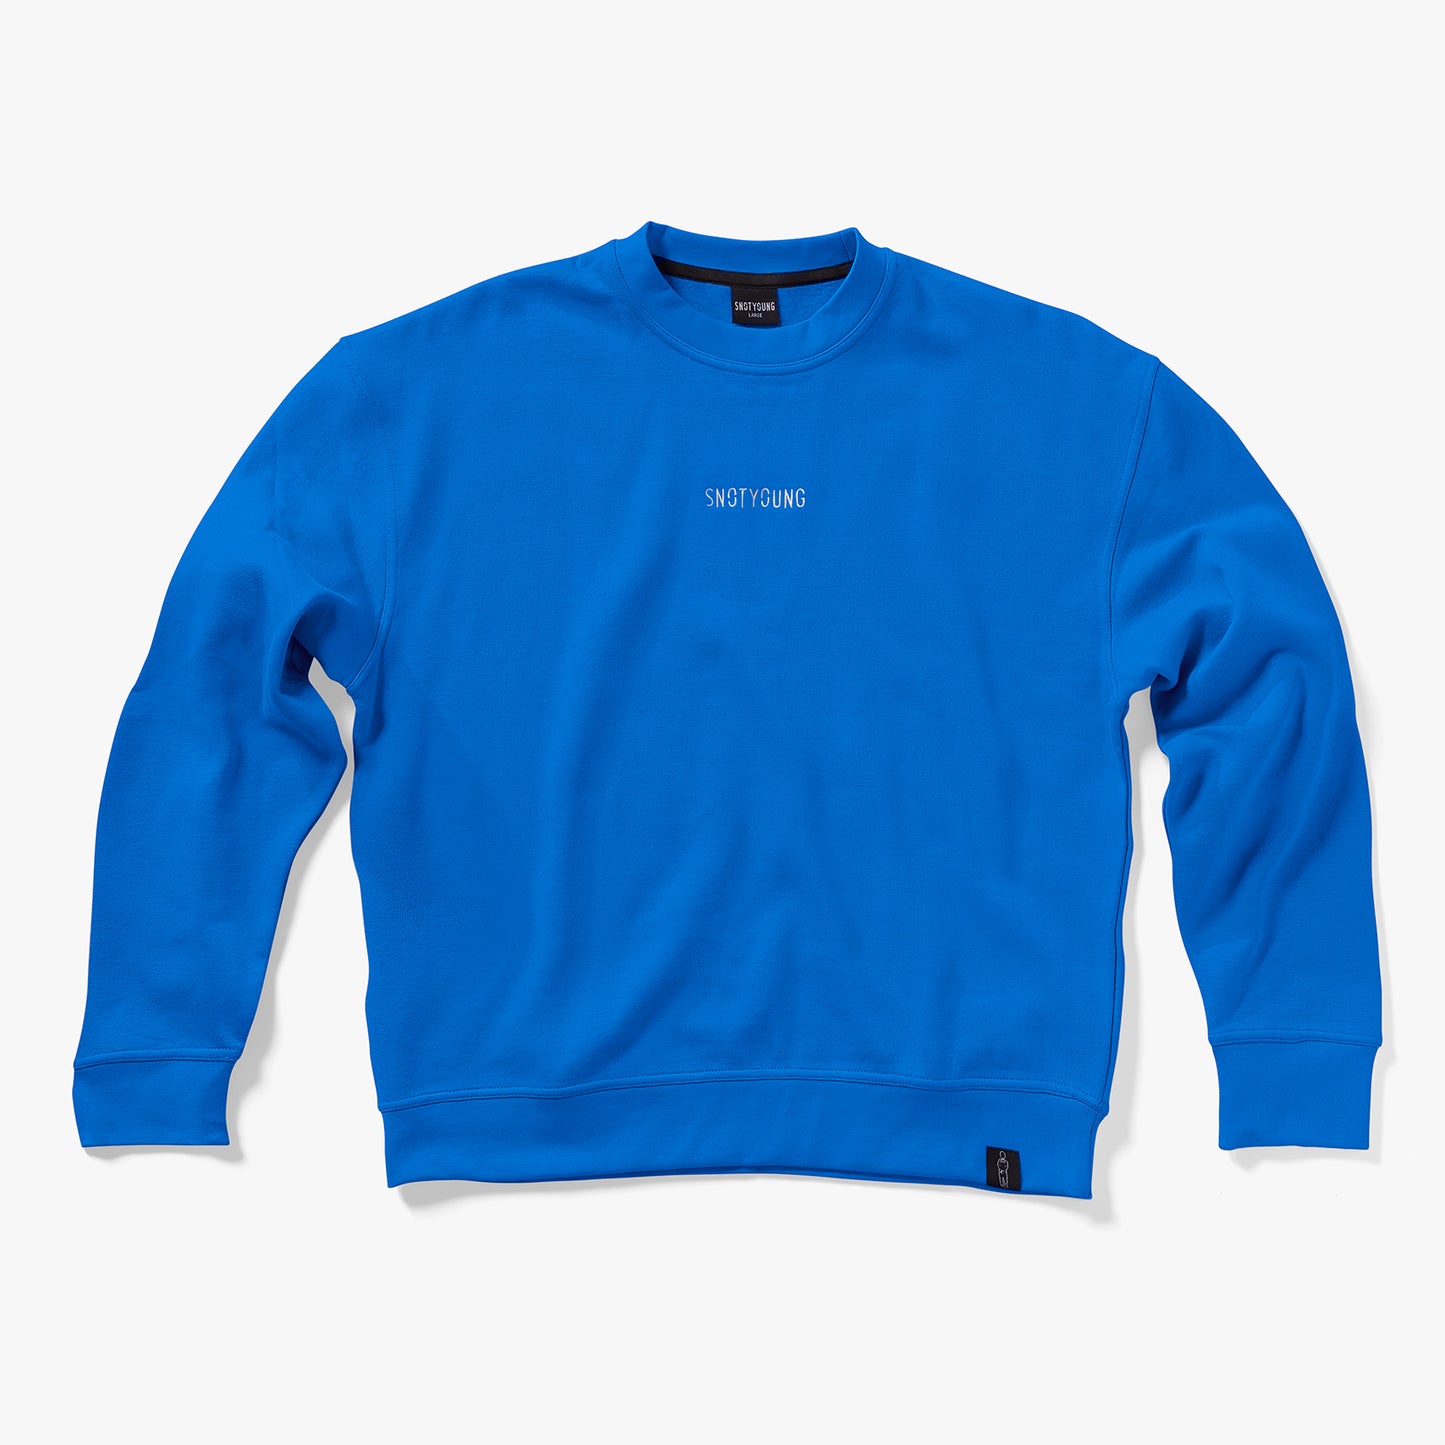 SNOTYOUNG | Sweater - Indigo Blue